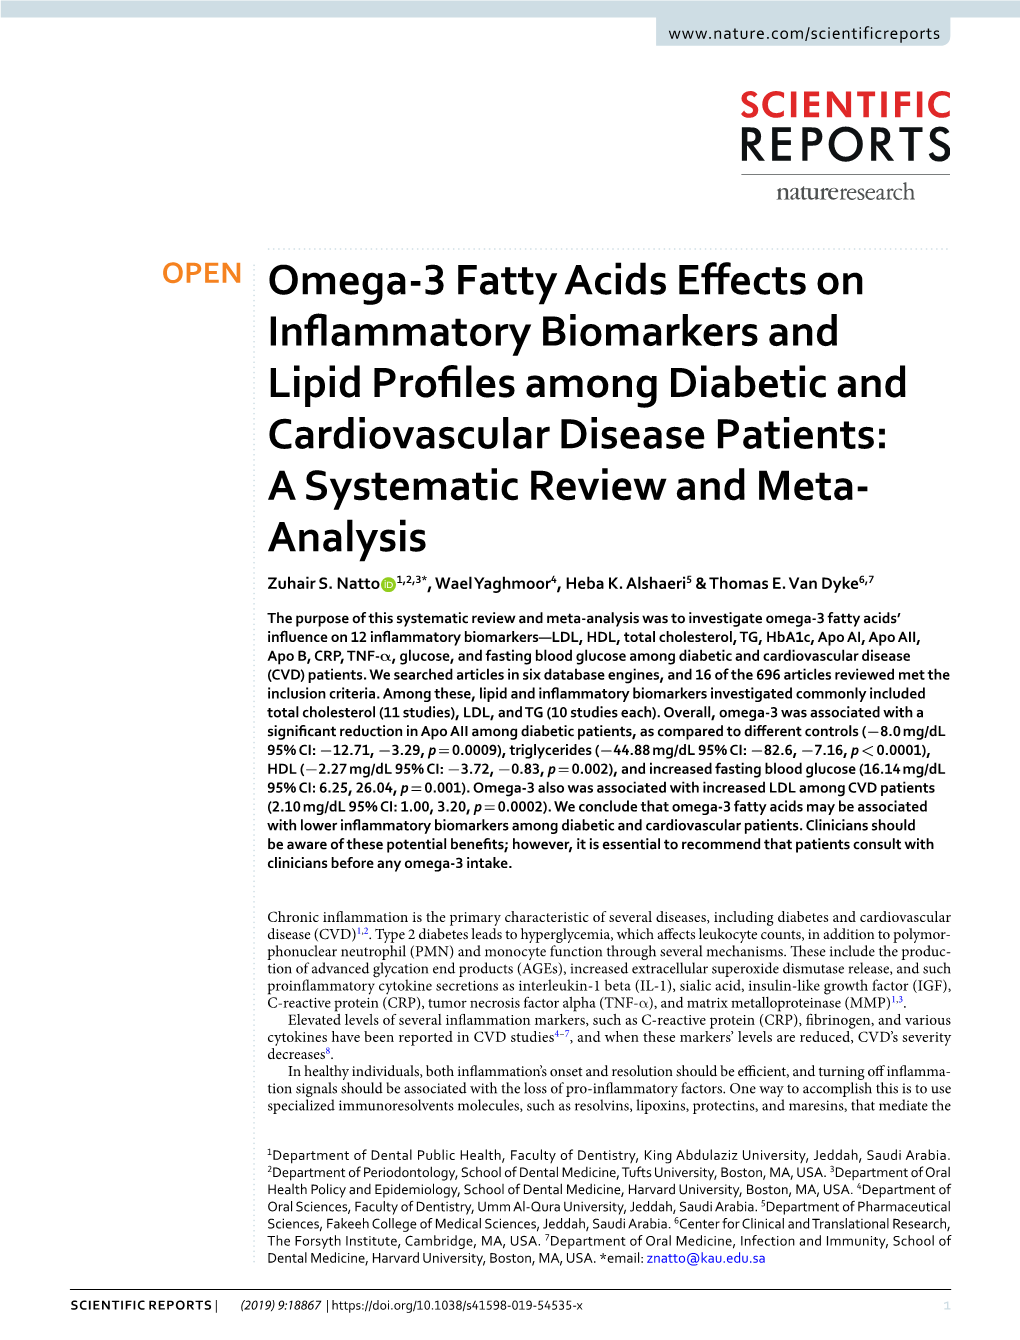 Omega-3 Fatty Acids Effects on Inflammatory Biomarkers and Lipid